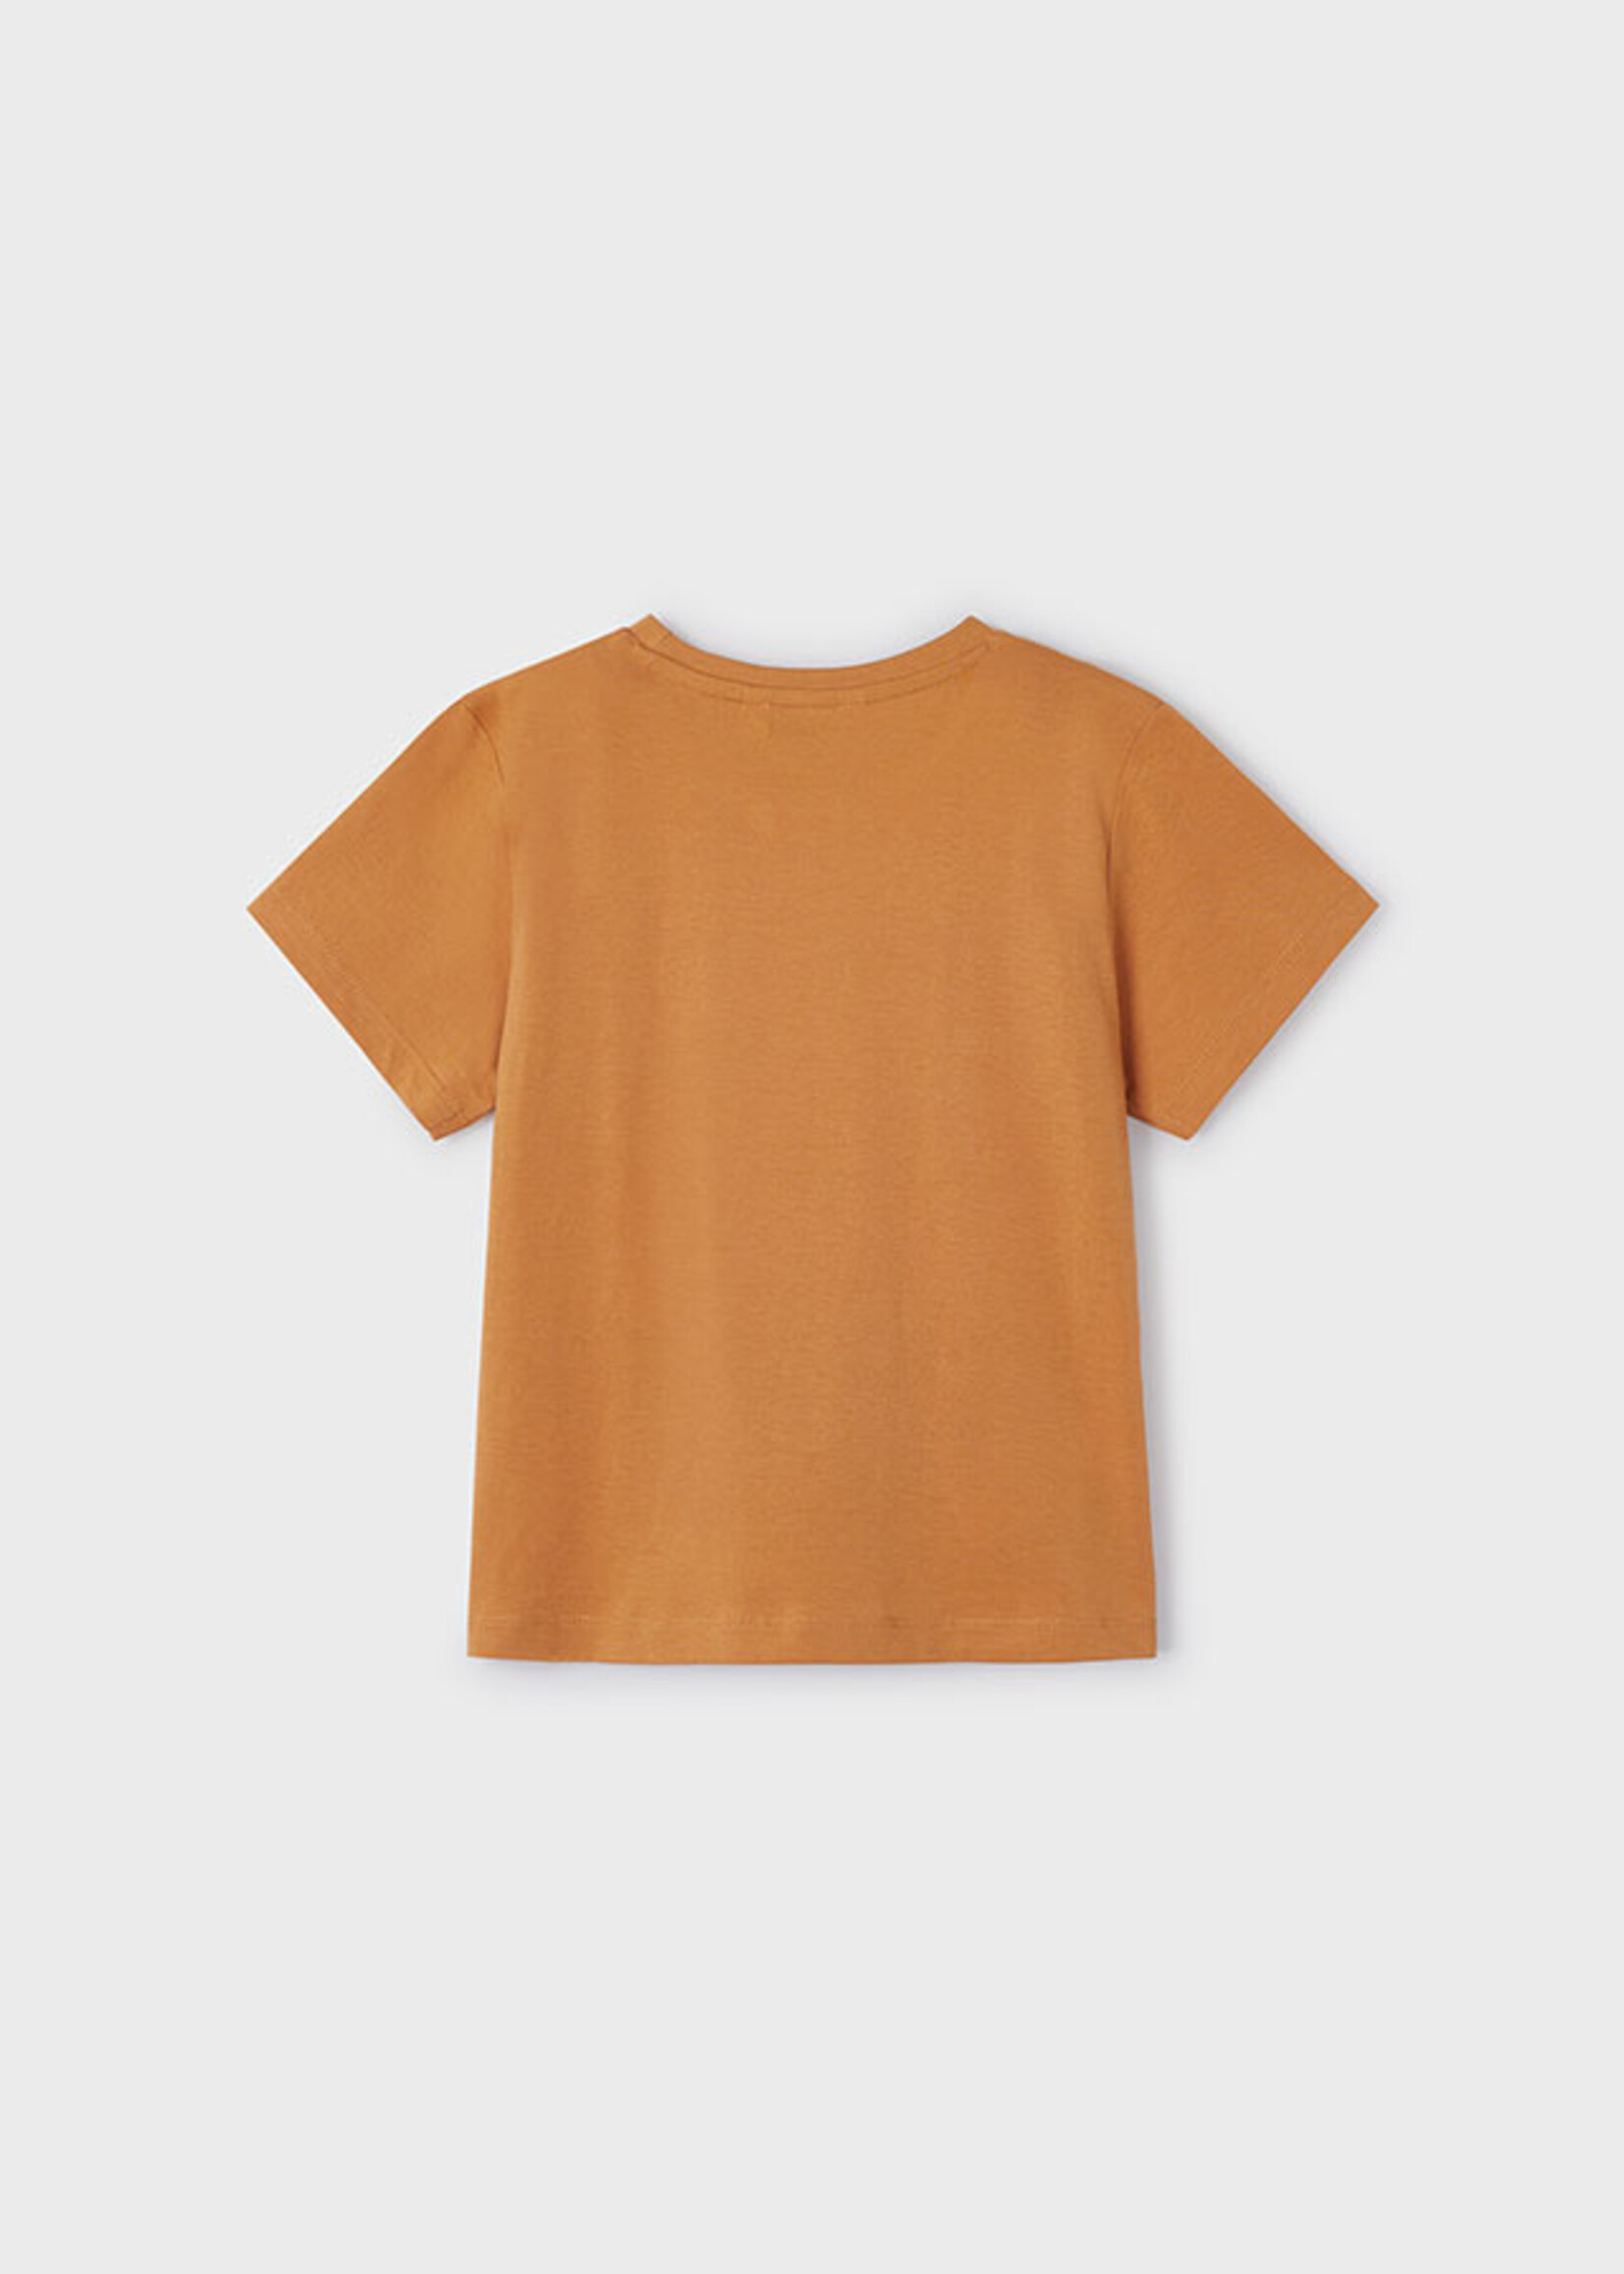 Mayoral Mini Boy             3011 S/s t-shirt                   Paprika